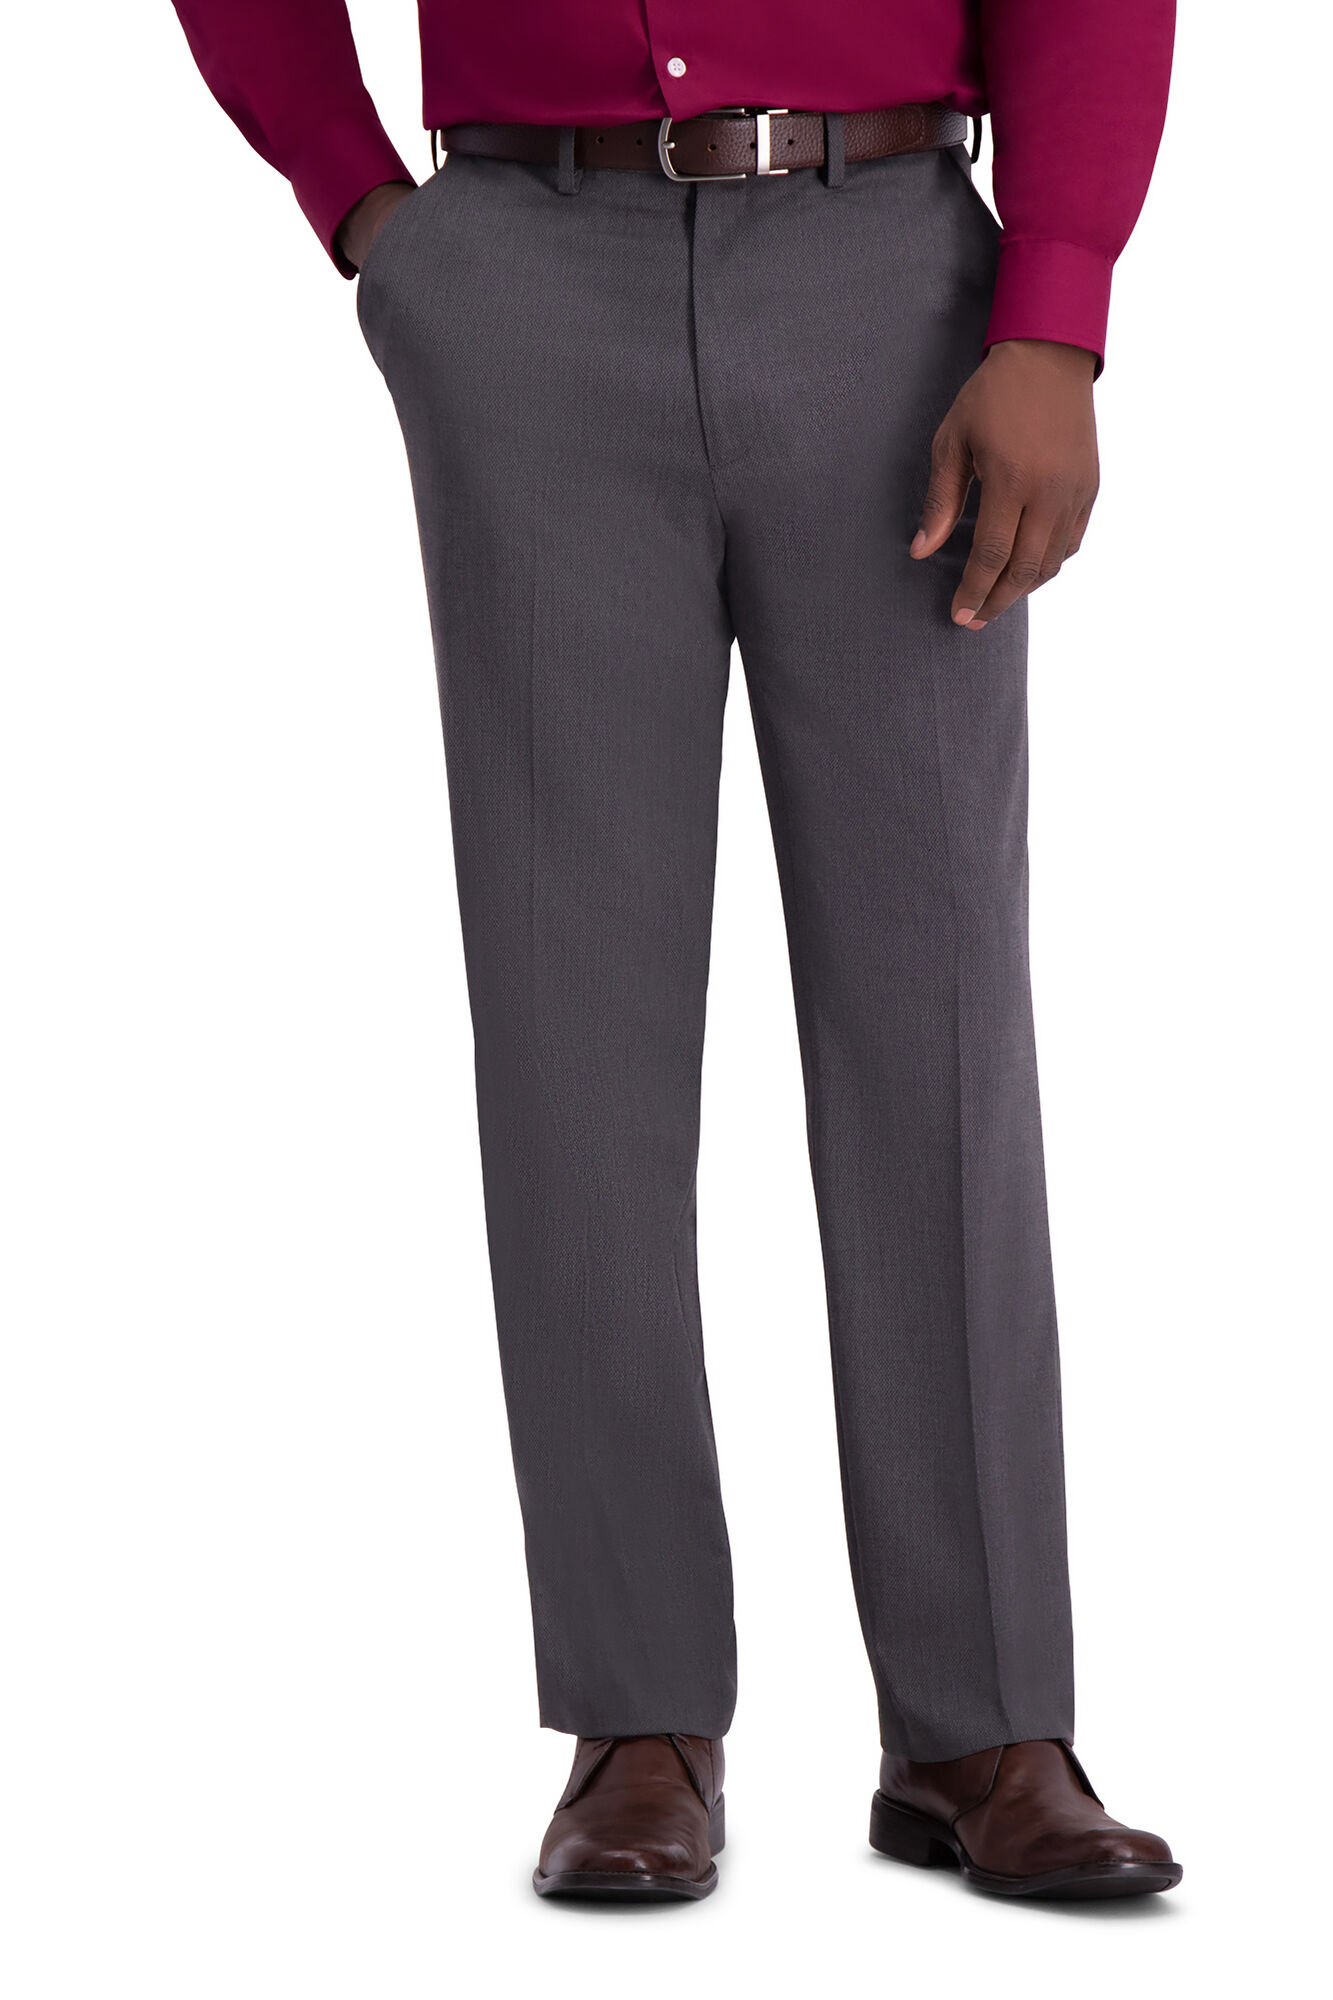 J.M. Haggar Premium Stretch Suit Pant -Diamond Weave Dark Grey (HY00158 Clothing Pants) photo